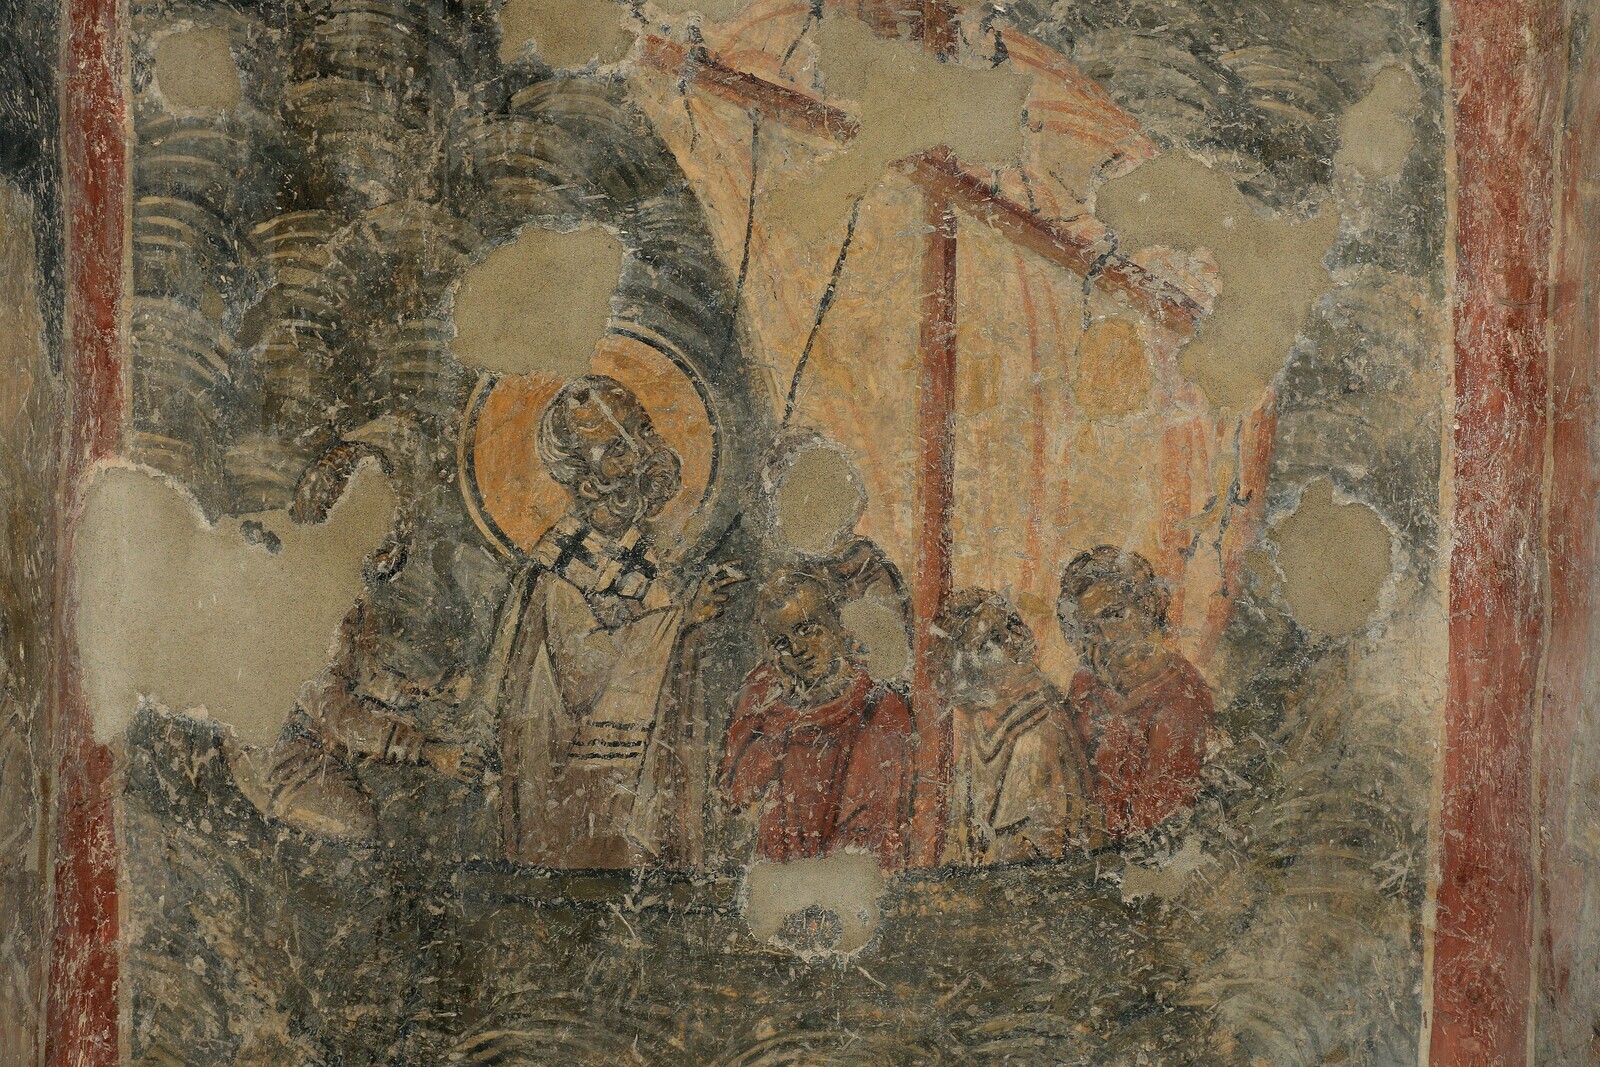 Saint Nicholas Rescues the Sailors from Shipwreck, detail